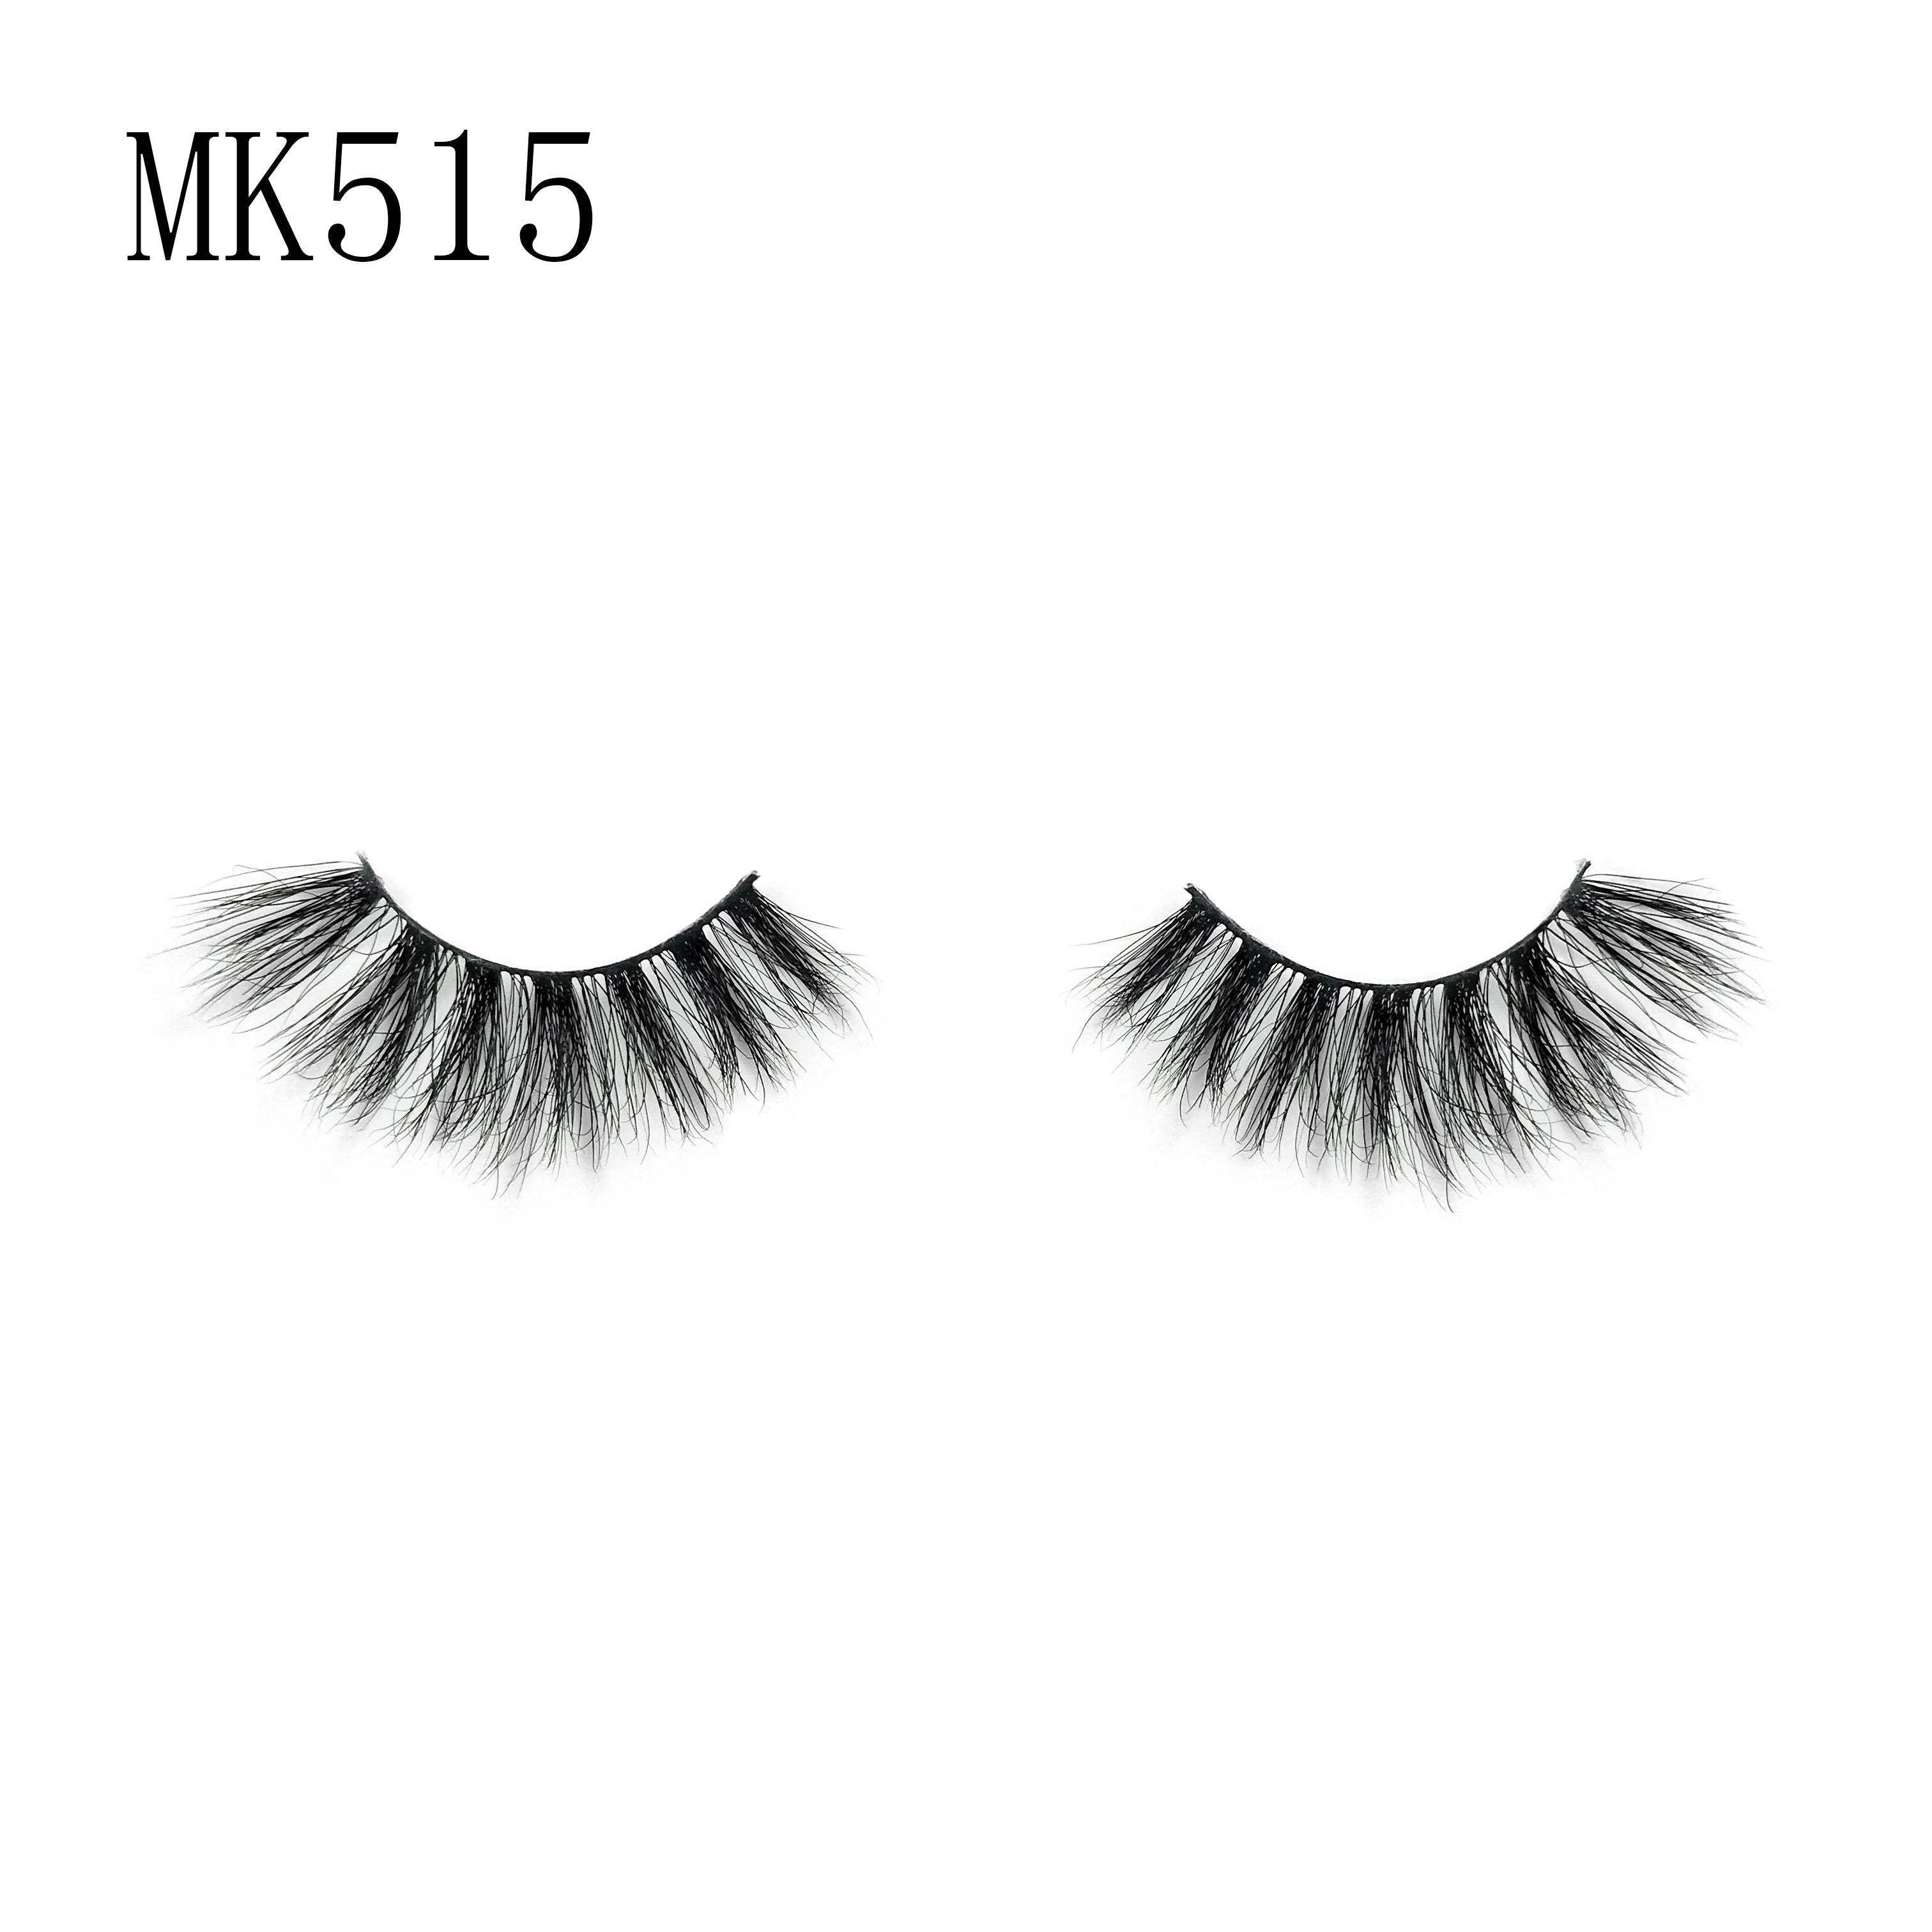 3D Mink Lashes - MK515